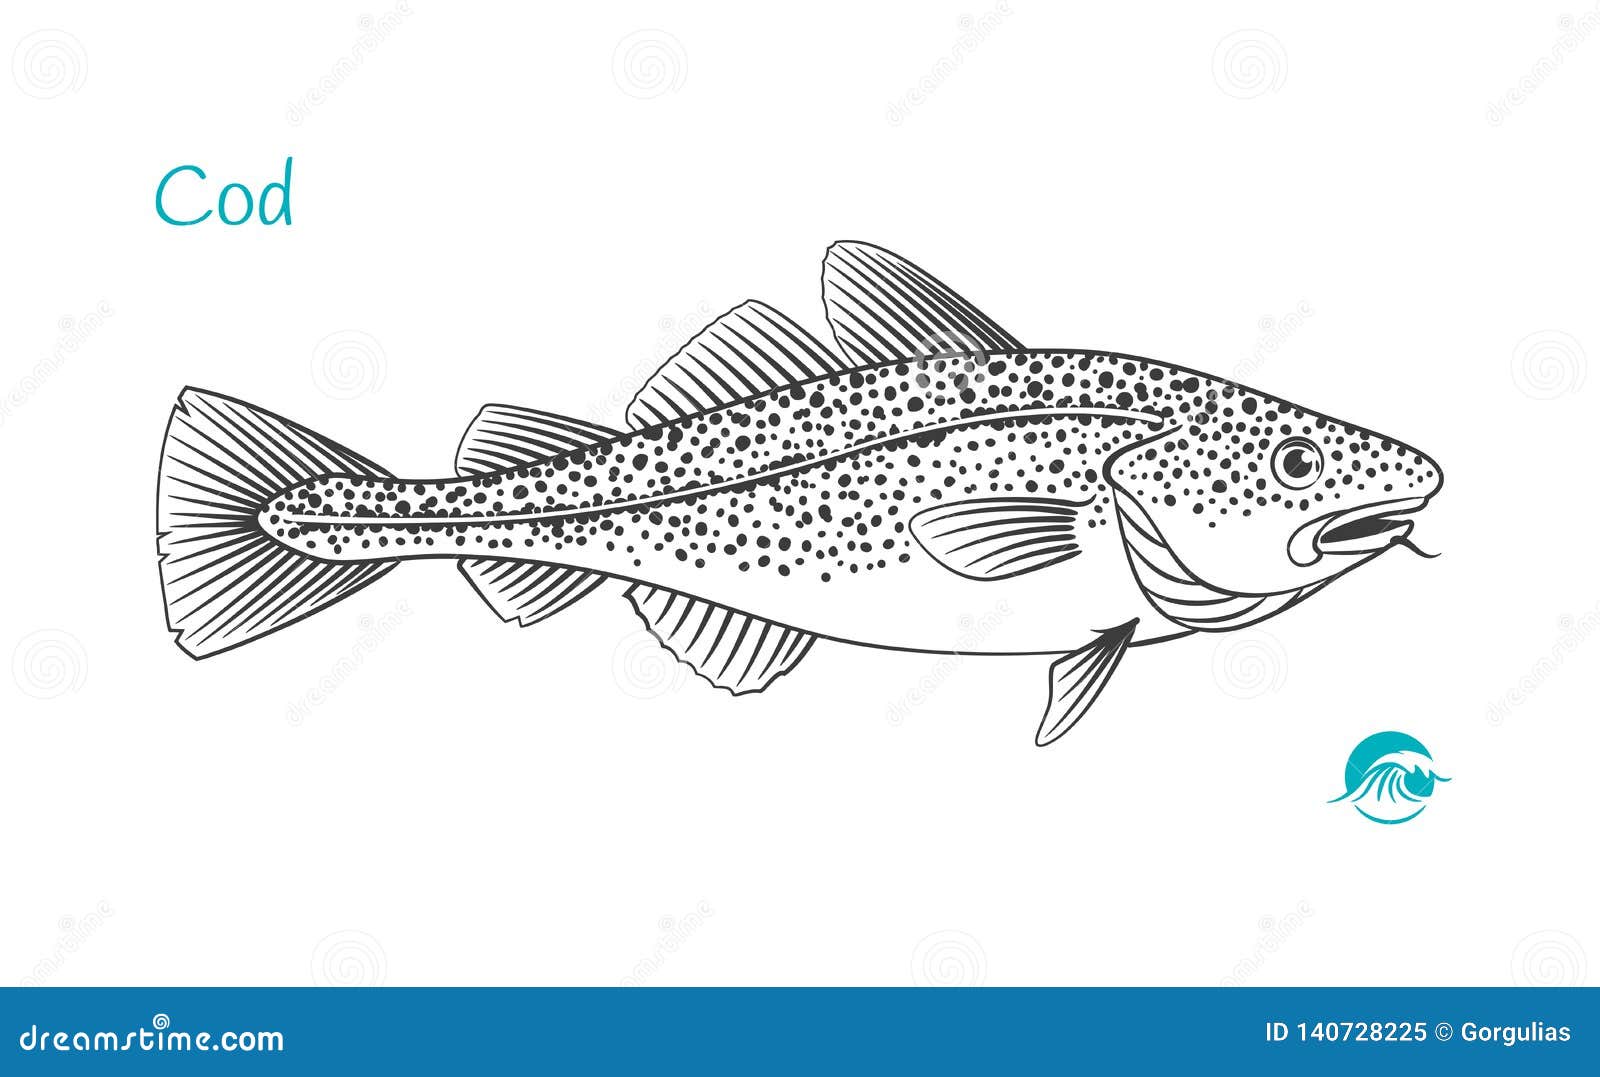 cod fish hand-drawn 